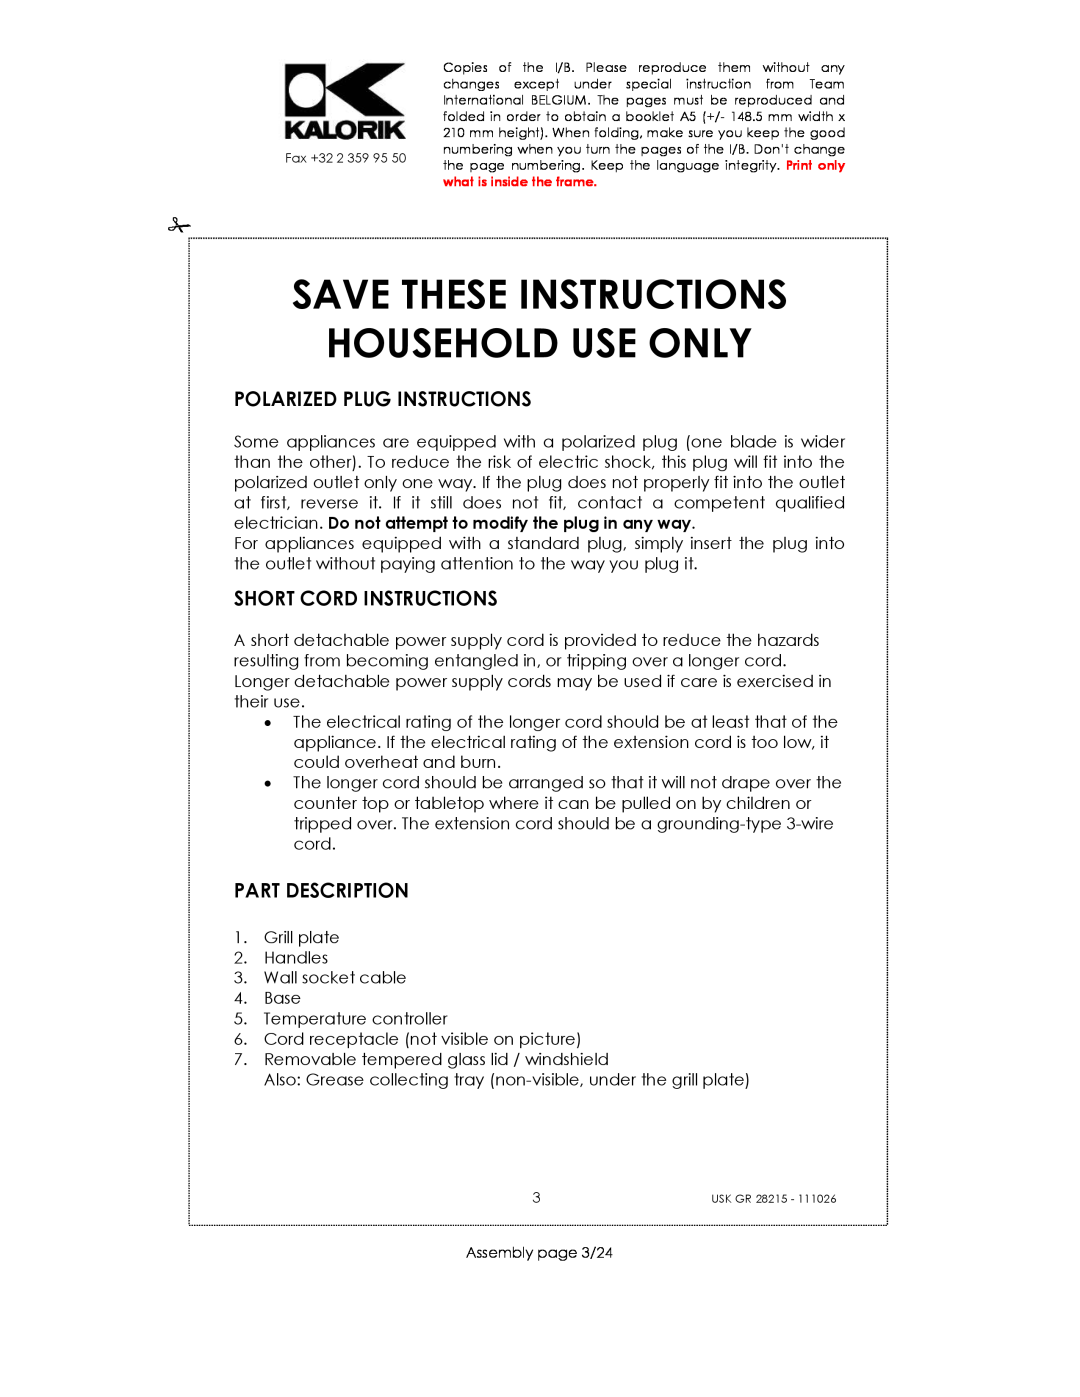 Kalorik USK GR 28215 Save These Instructions Household Use Only, Polarized Plug Instructions, Short Cord Instructions 